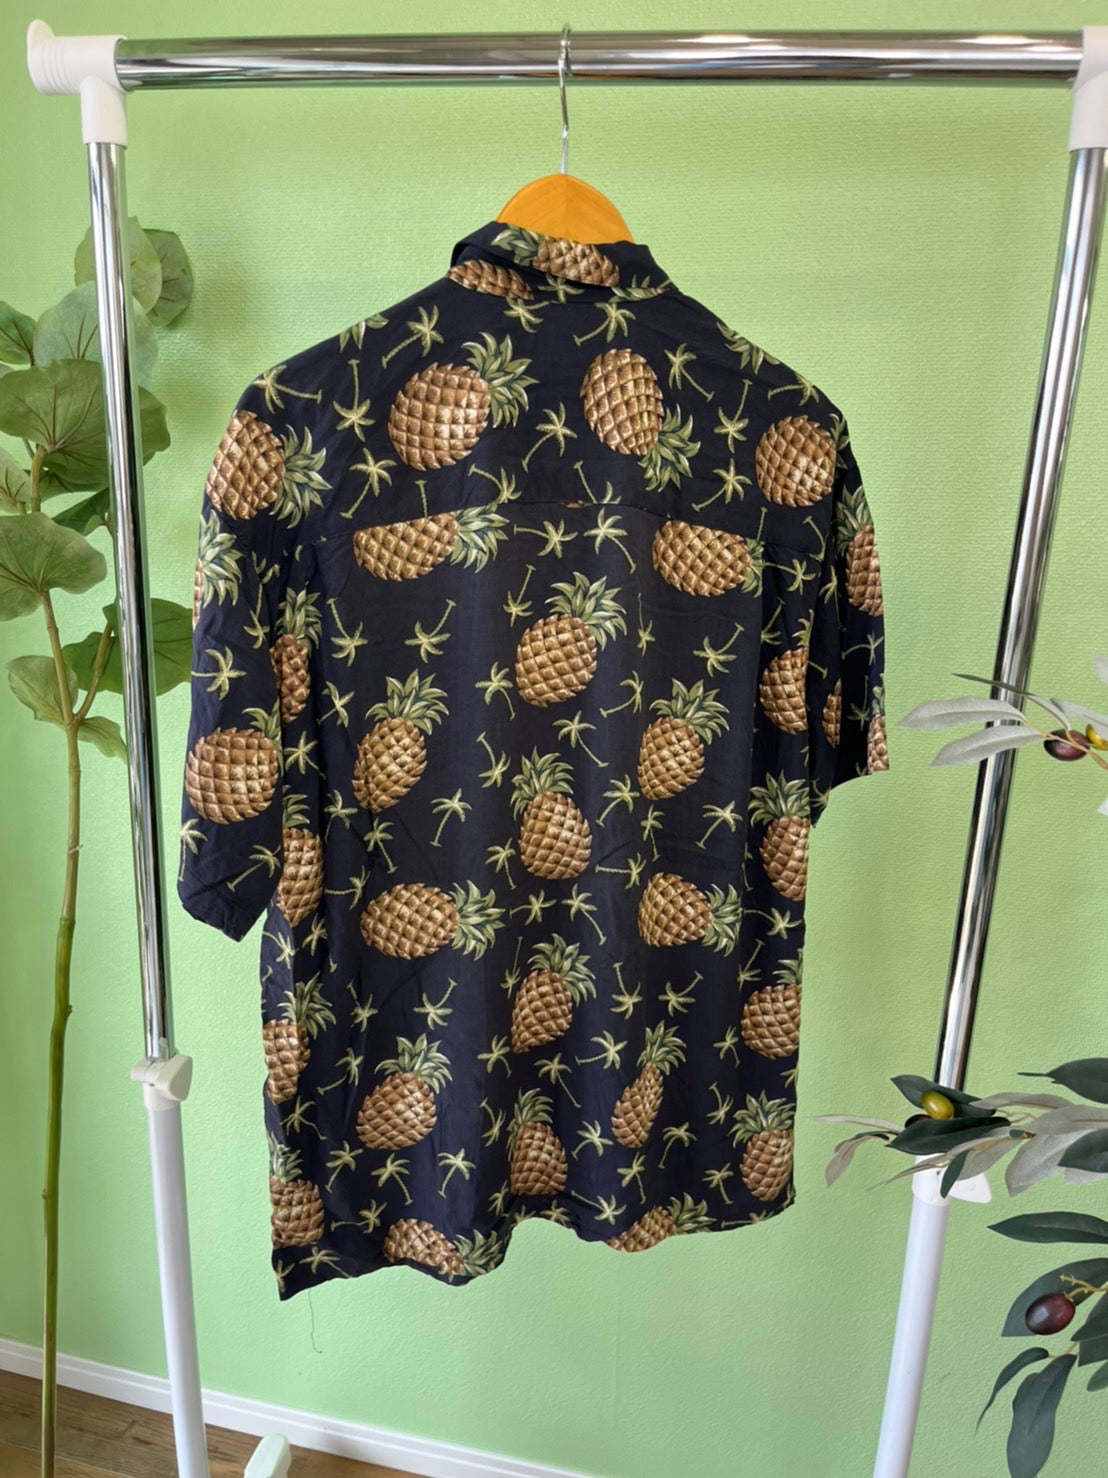 【SPLATT】 All Over Pattan rayon Aloha Shirt  オールオーバーパターン パイナップル柄 開襟 レーヨン アロハシャツ （men's M)